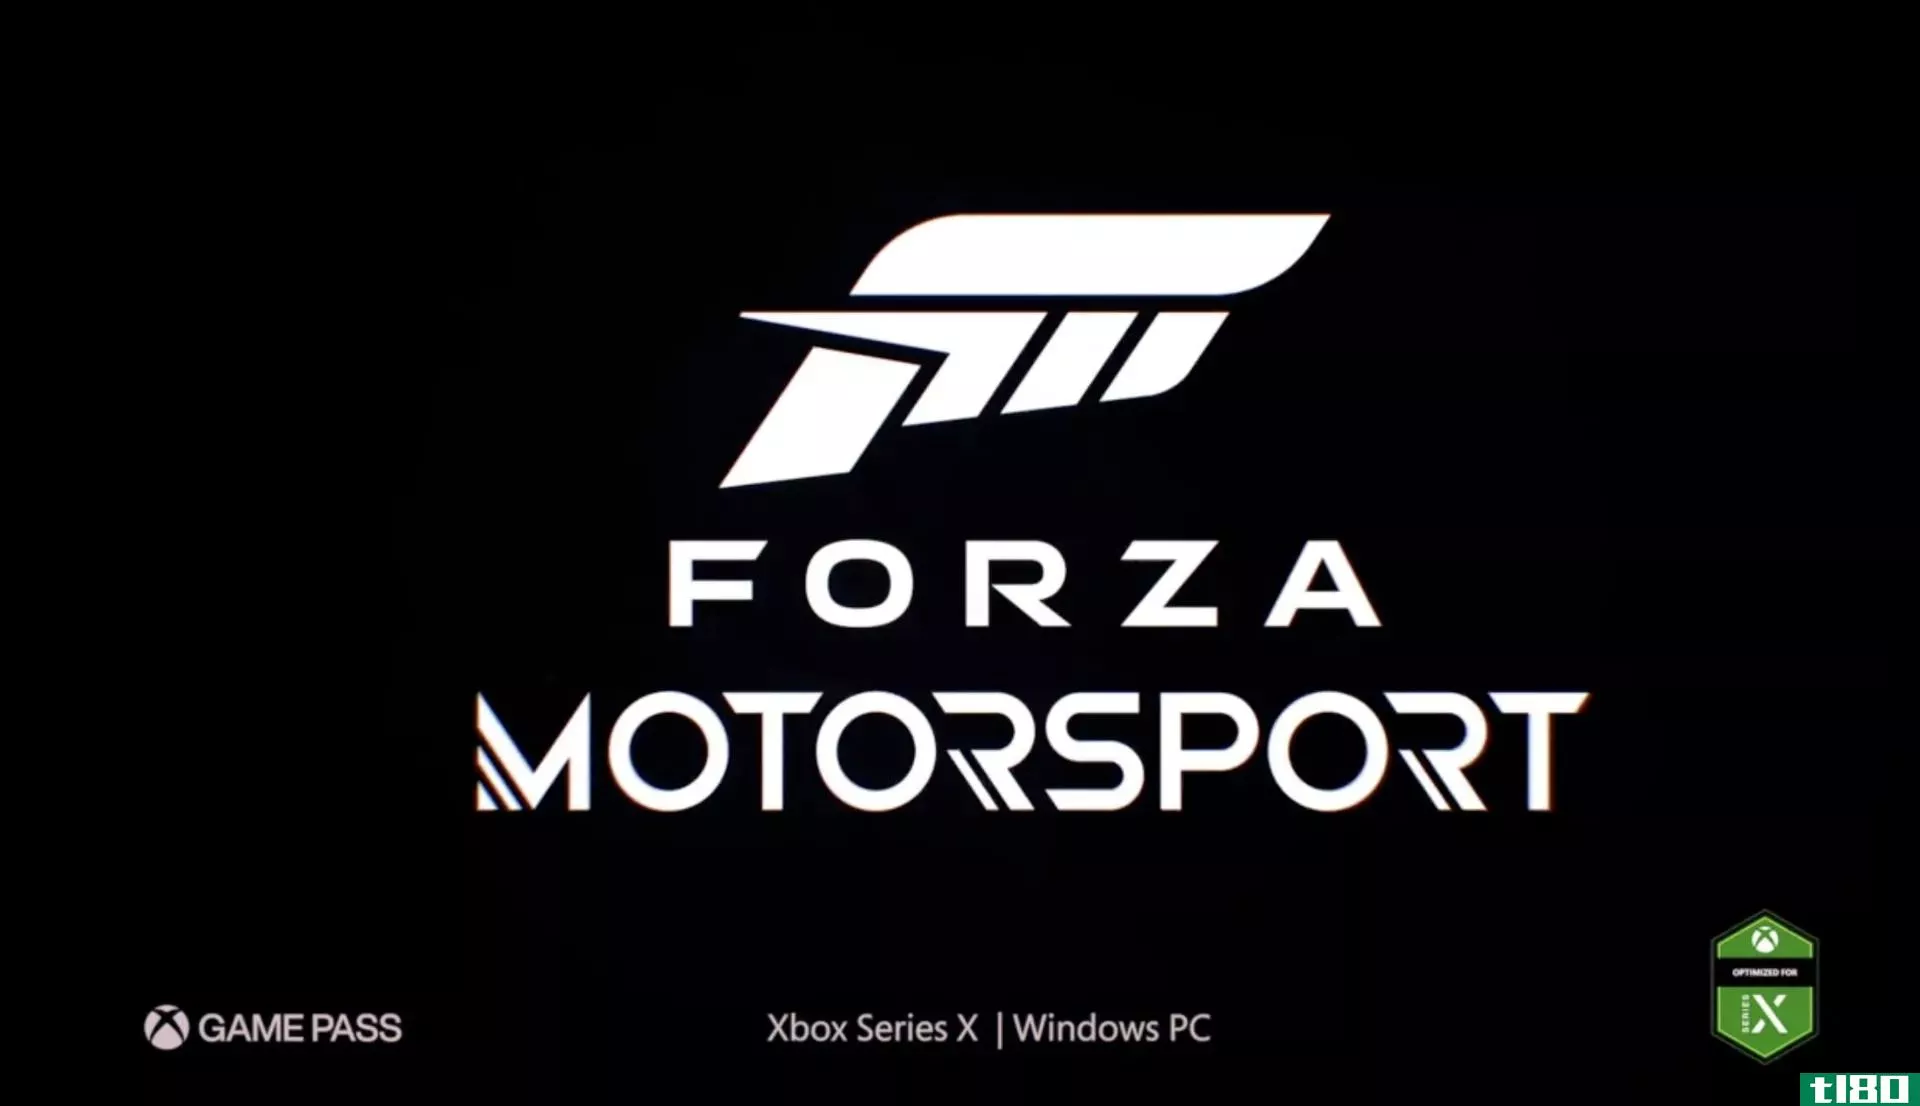 forza motorsport即将推出具有4k、60fps和光线跟踪功能的xbox x系列